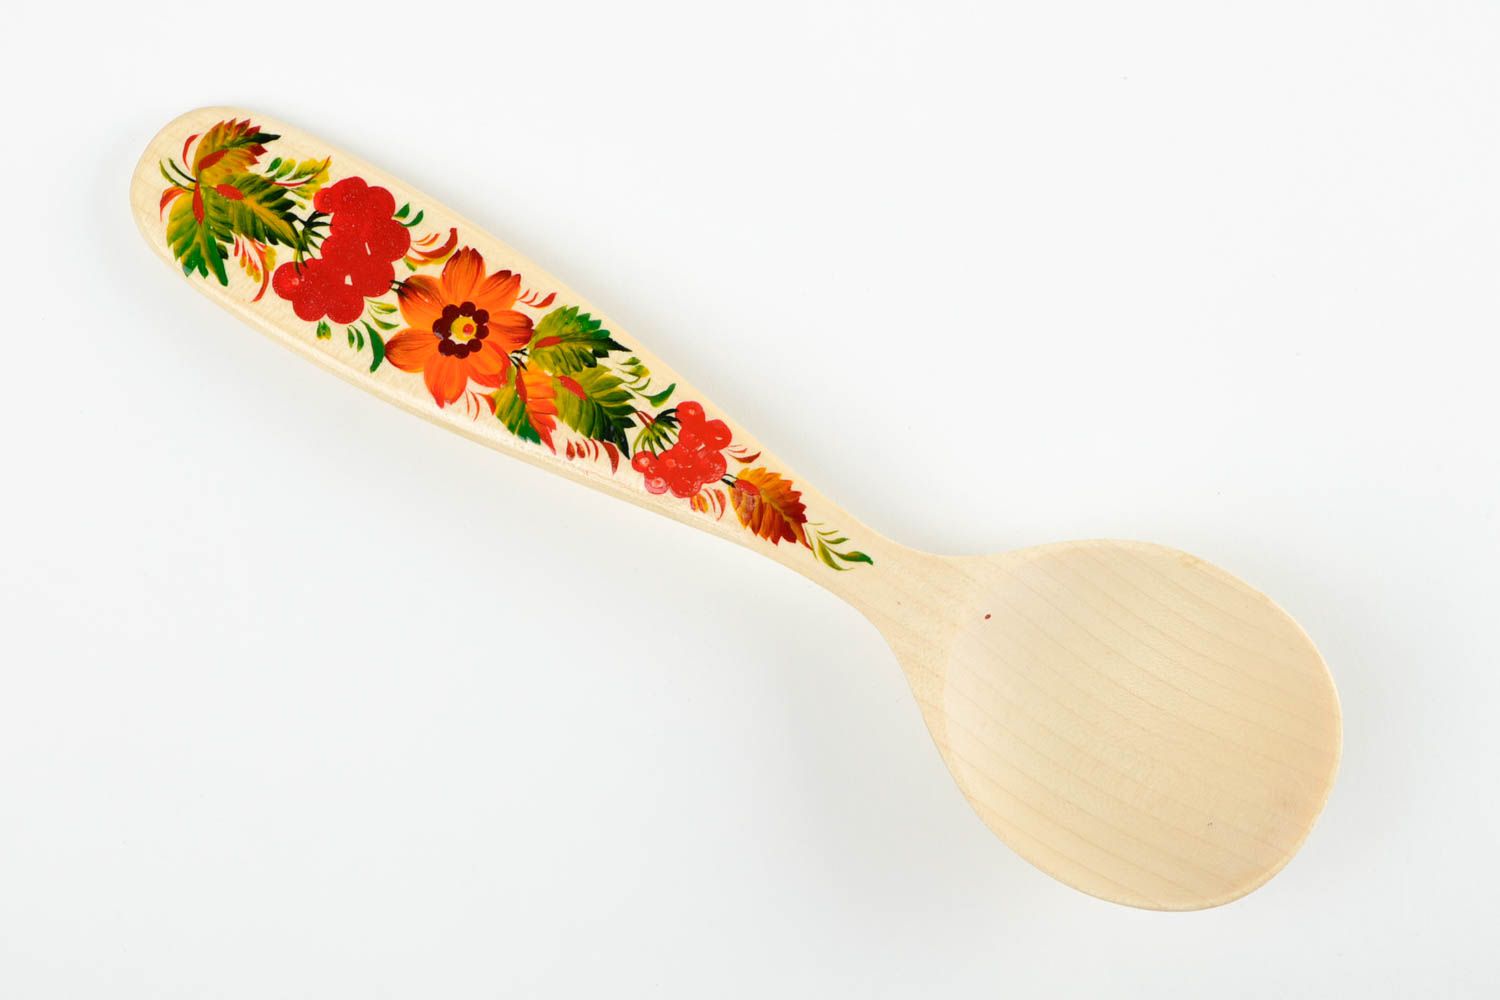 Handmade spoon designer spoon unusual kitchen cutlery decorative use only photo 3